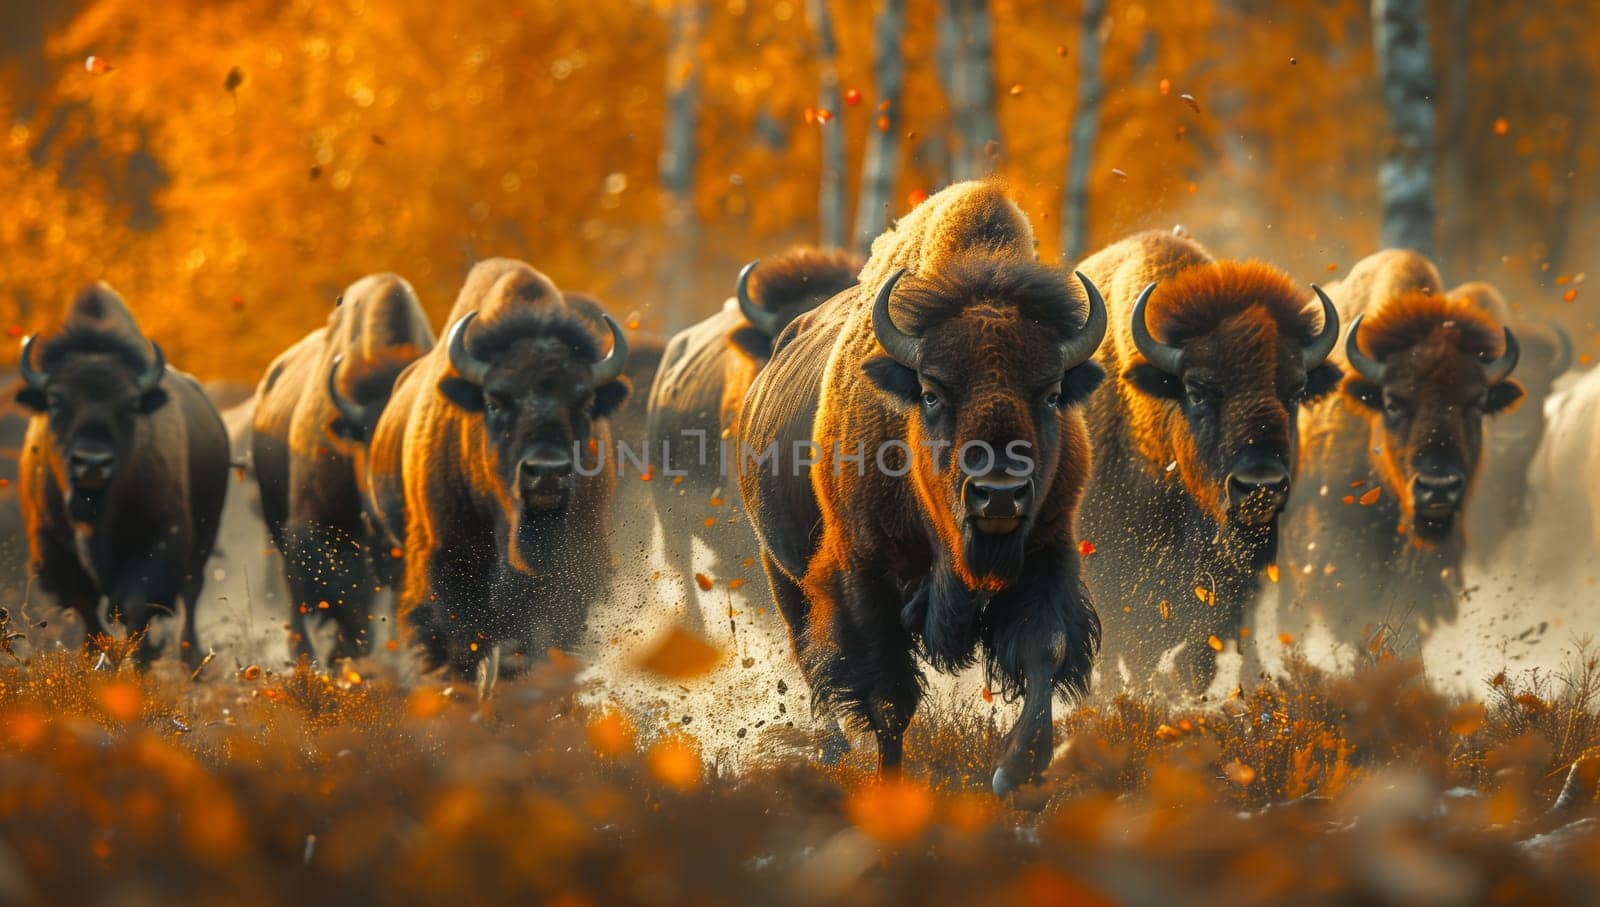 Bison herd stampedes through forest, captured in a painting by richwolf